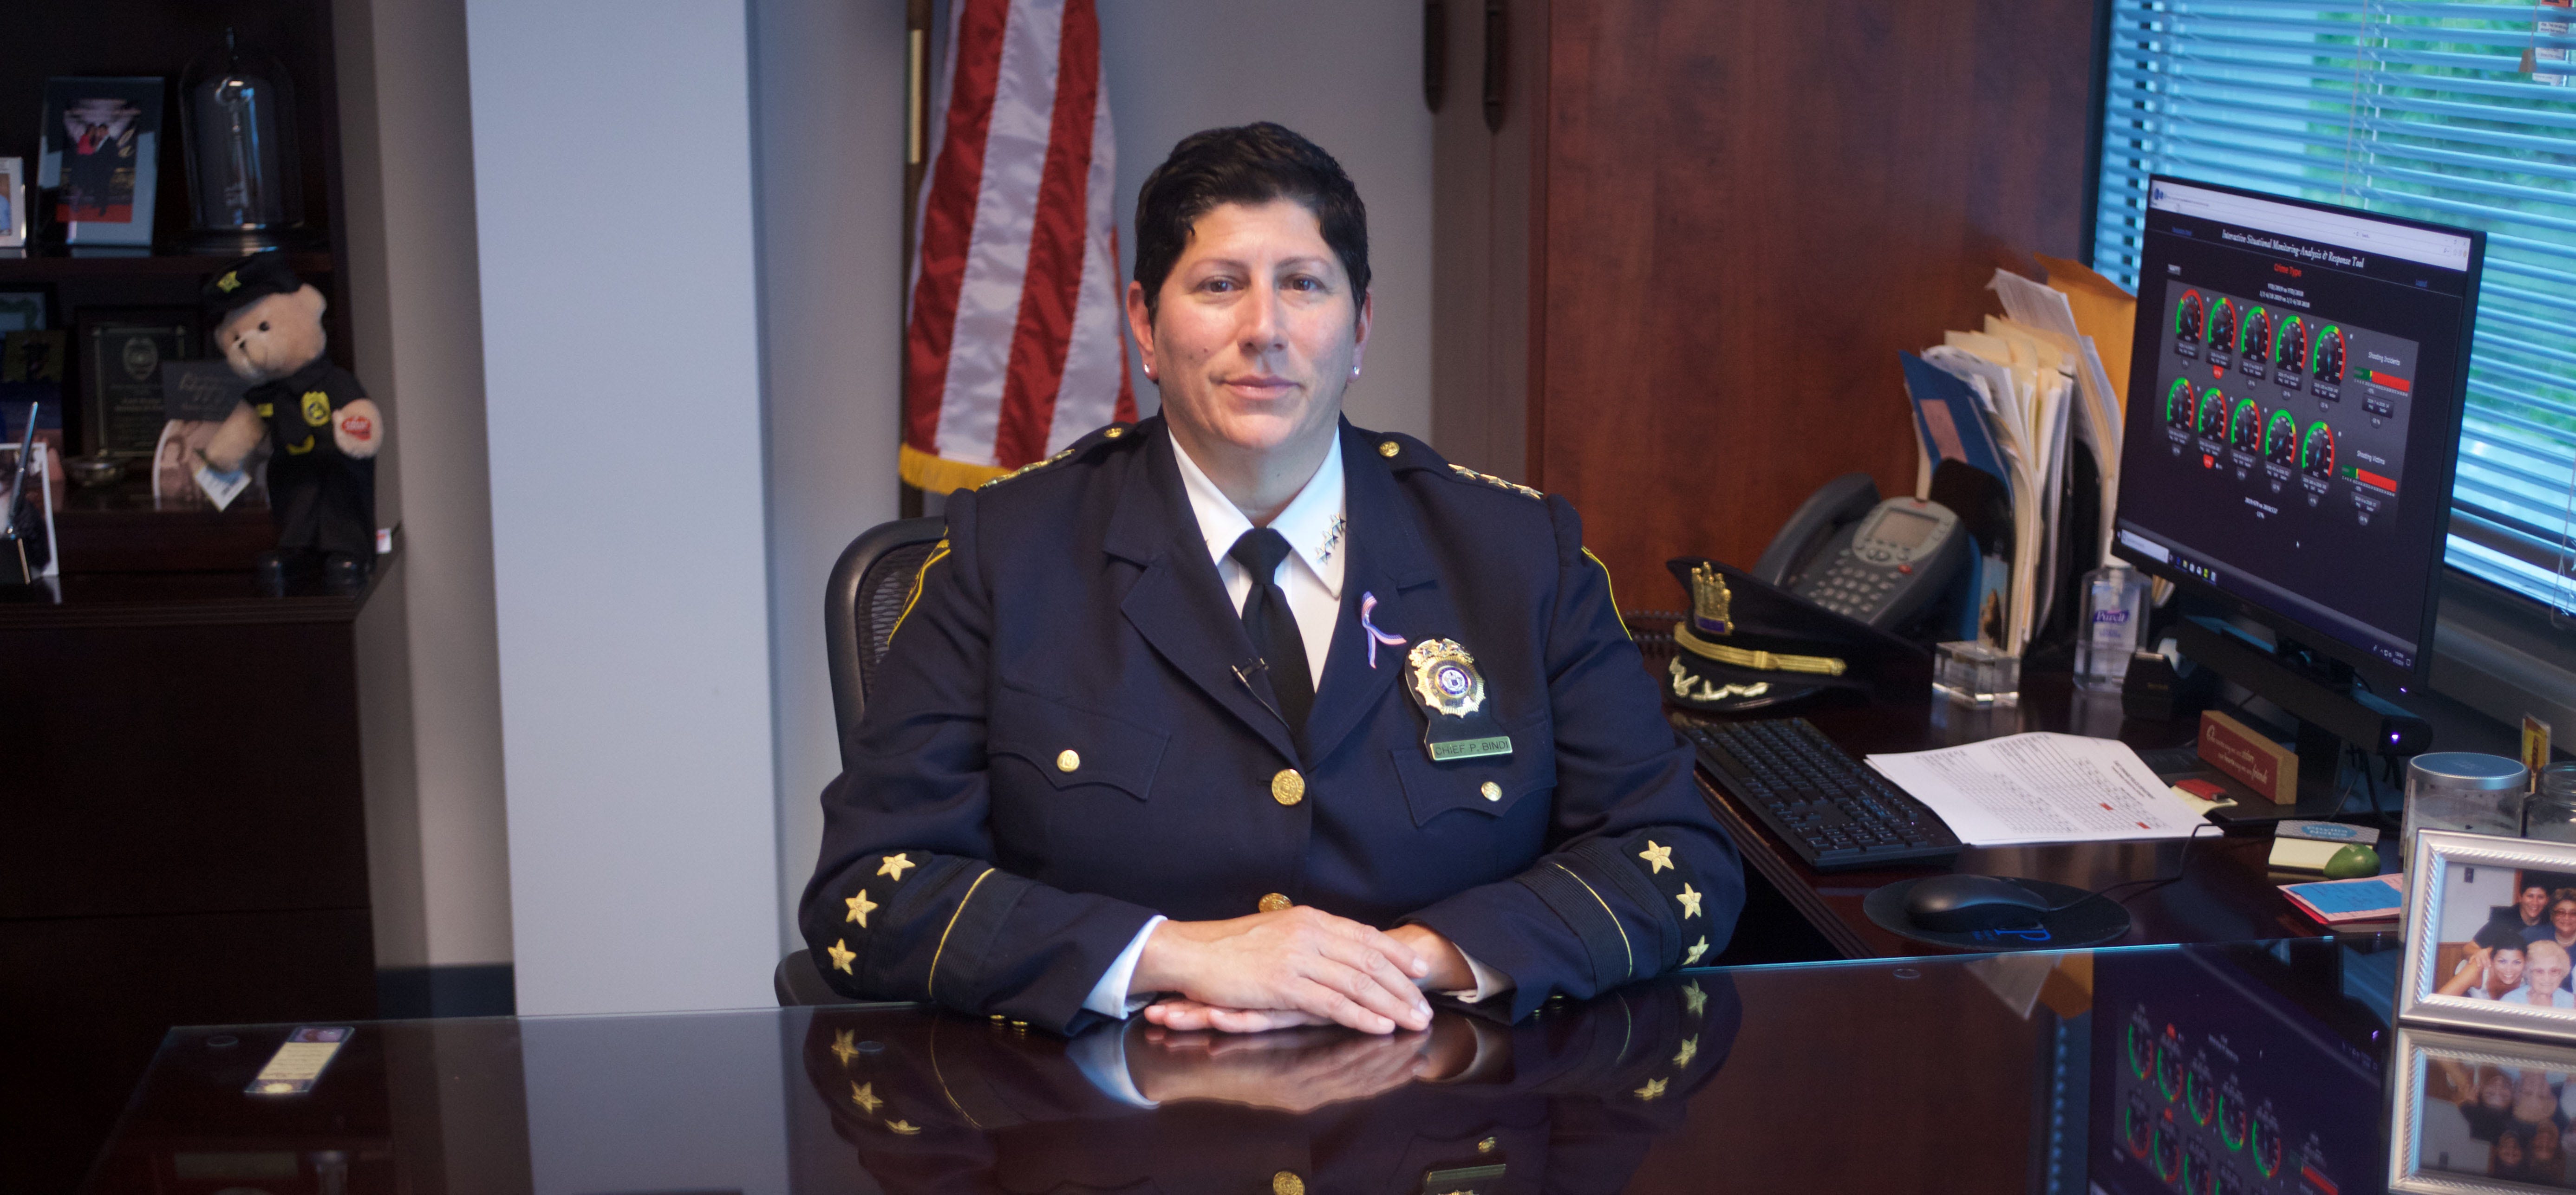 East Orange Police Chief Phyllis Bindi